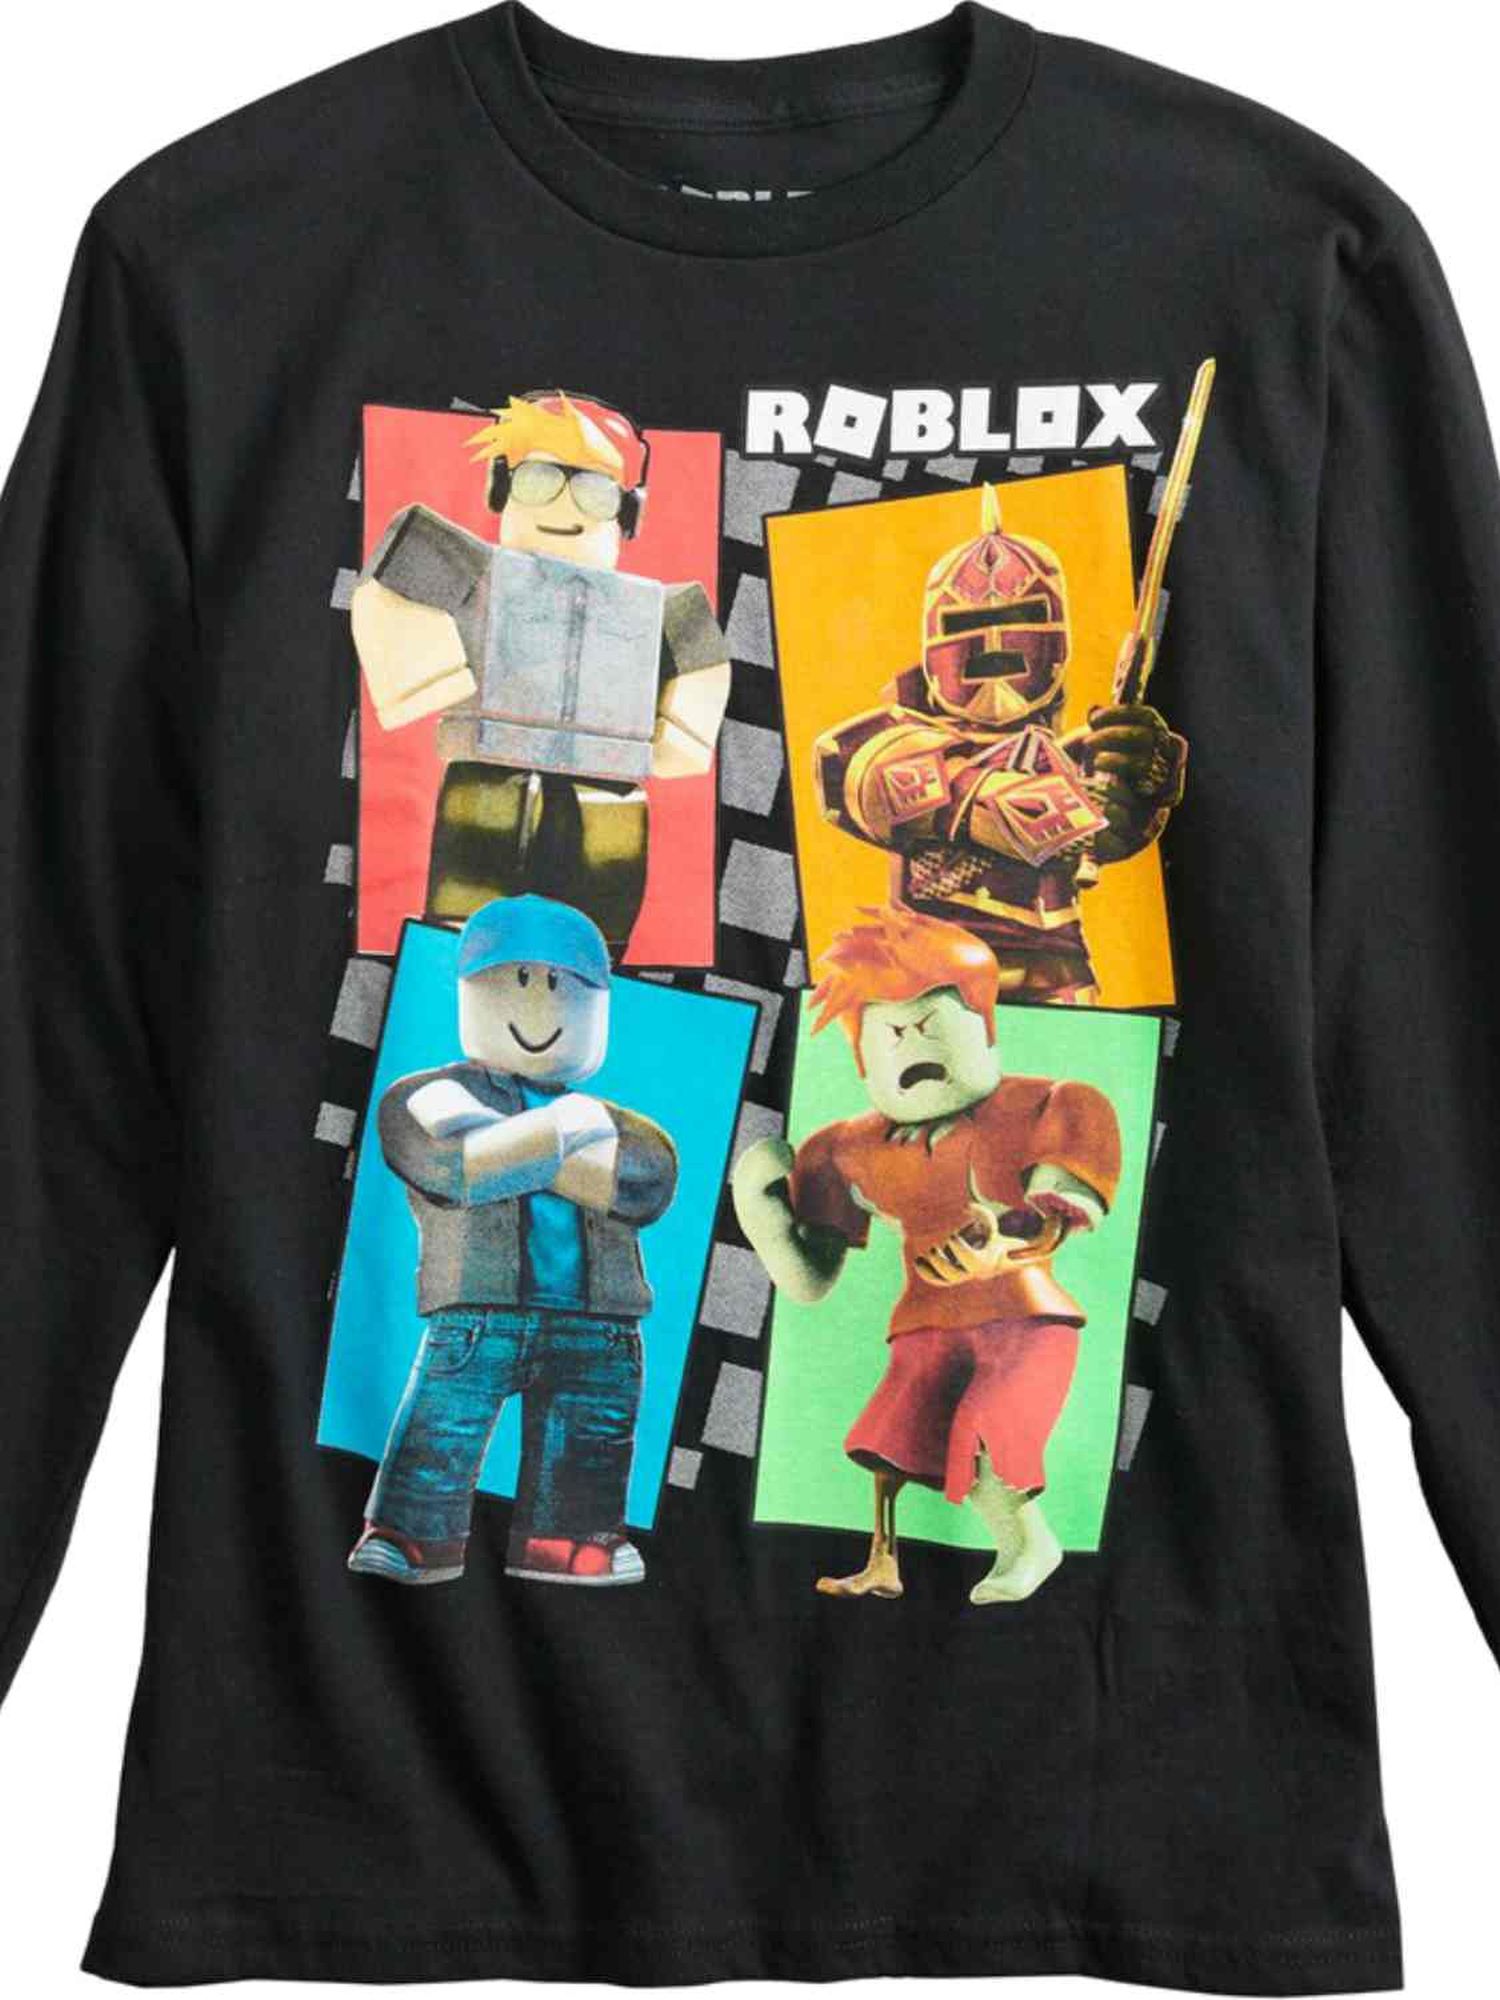 details about roblox t shirt boys 2xl new black game logo 100 cotton graphic t shirt short sl